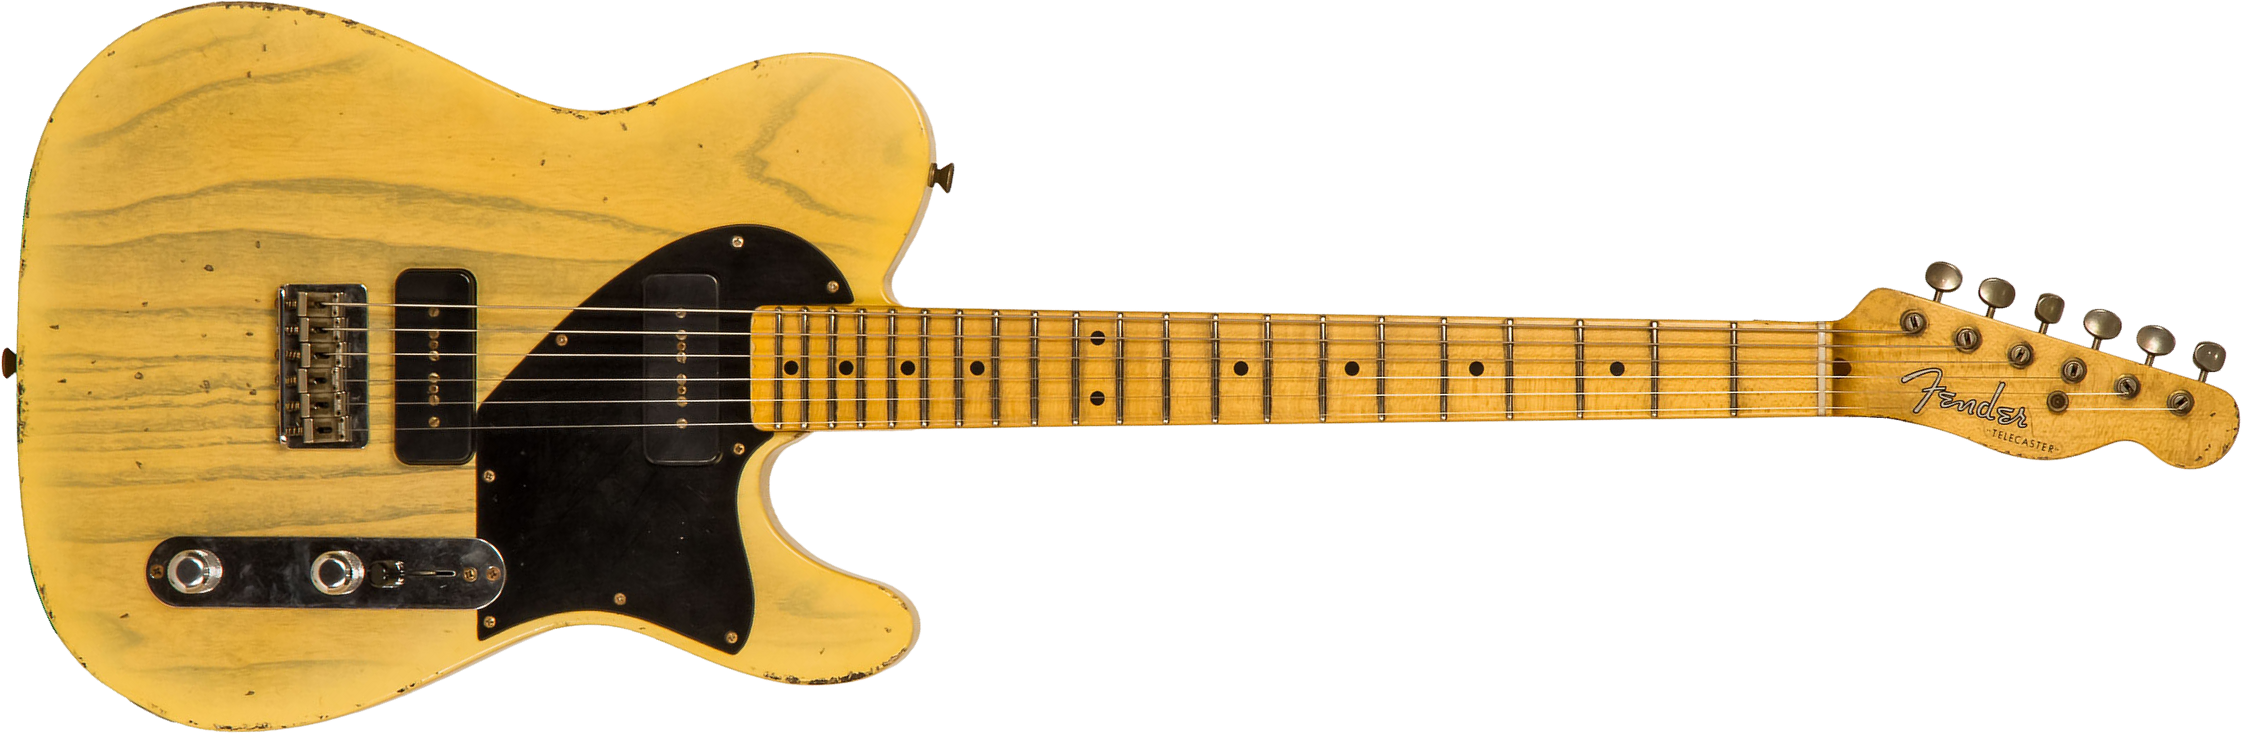 Fender Custom Shop Tele 1950 Masterbuilt J.smith Mn #r111000 - Relic Nocaster Blonde - Televorm elektrische gitaar - Main picture